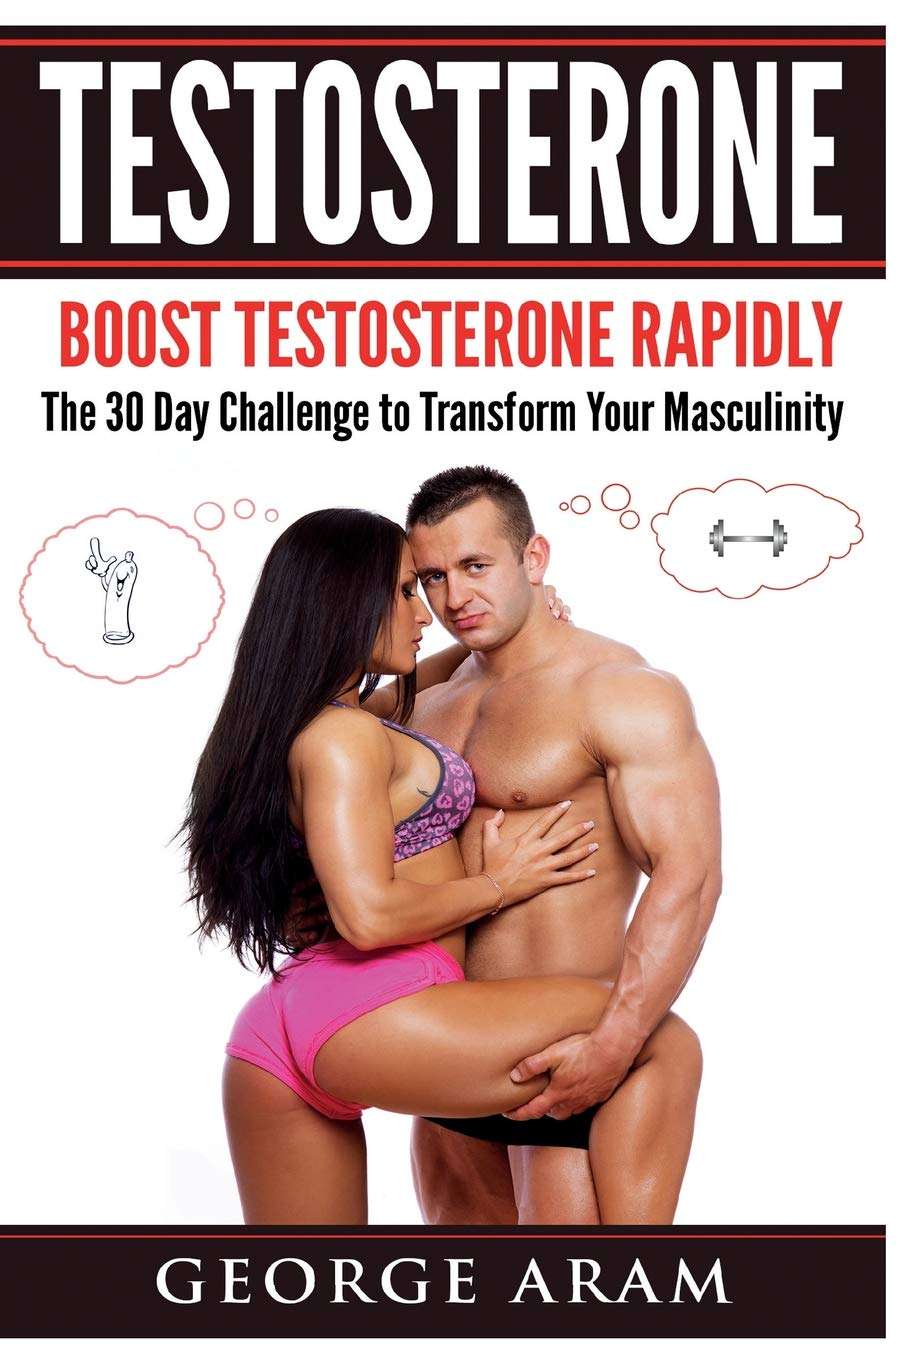 Testosterone (2017)